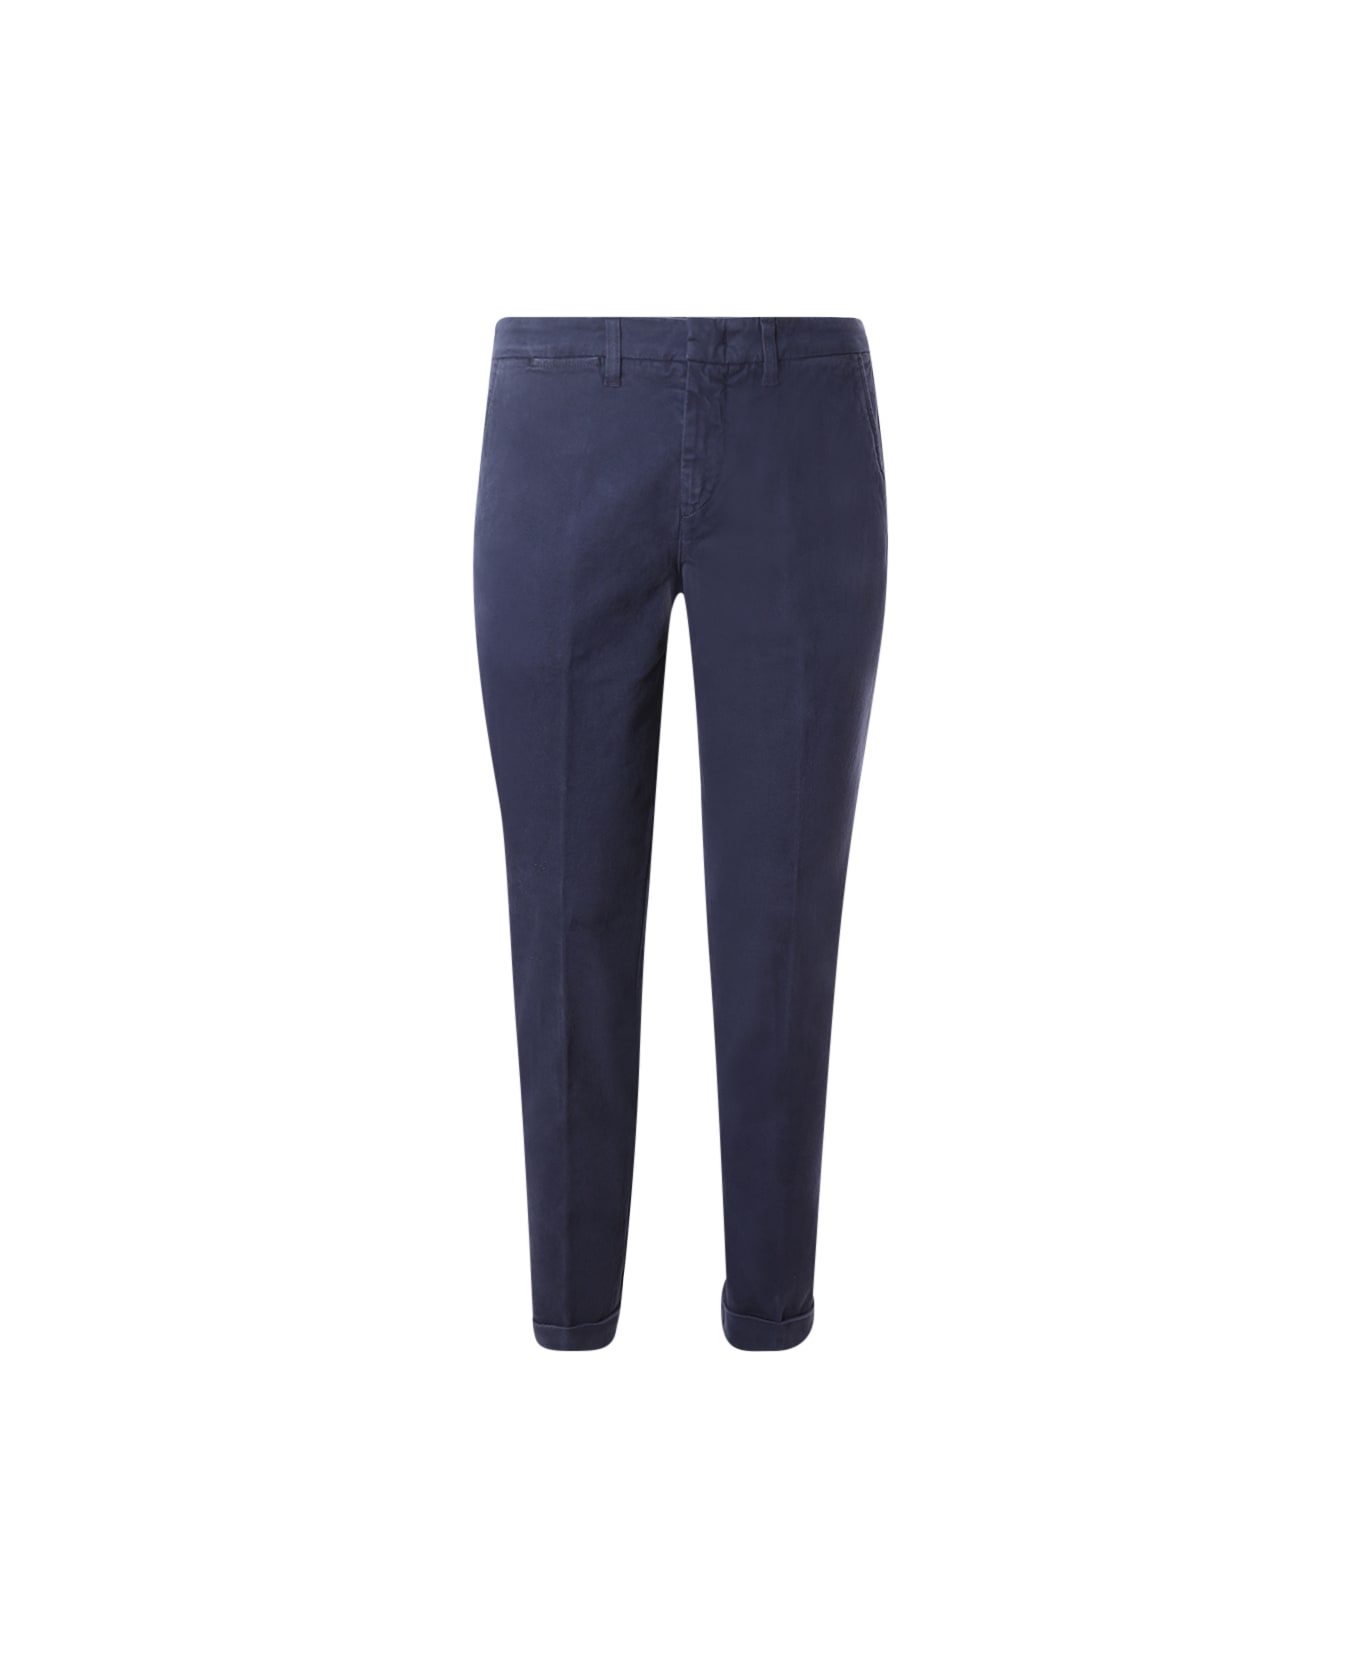 Fay Navy Blue Capri Cotton Trousers Pants - Blue ボトムス